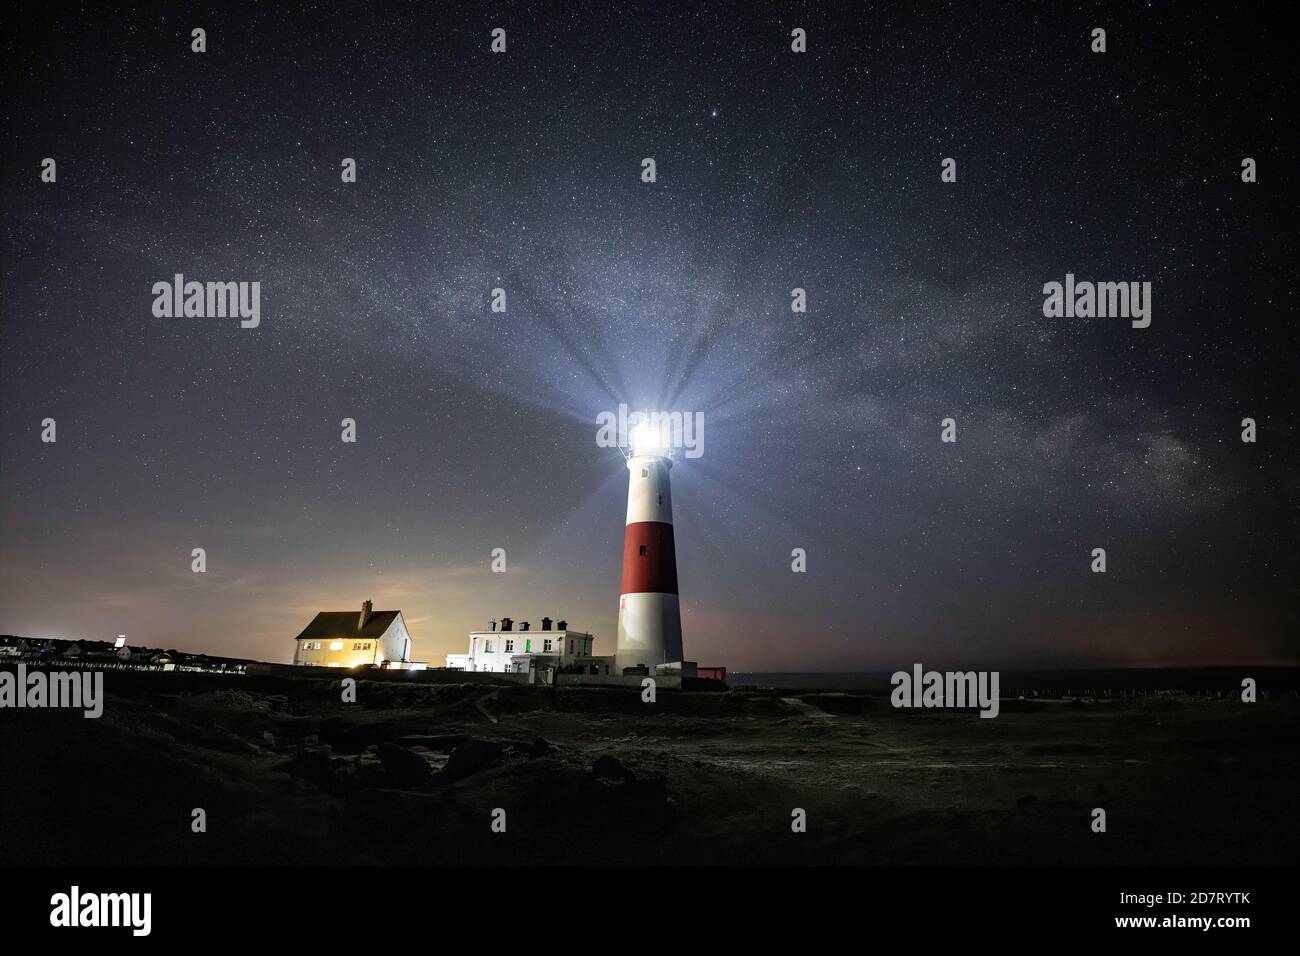 Portland Bill Lighthouse at night with Milky Way, Isle of Portland, Dorset, England, UK Stock Photo